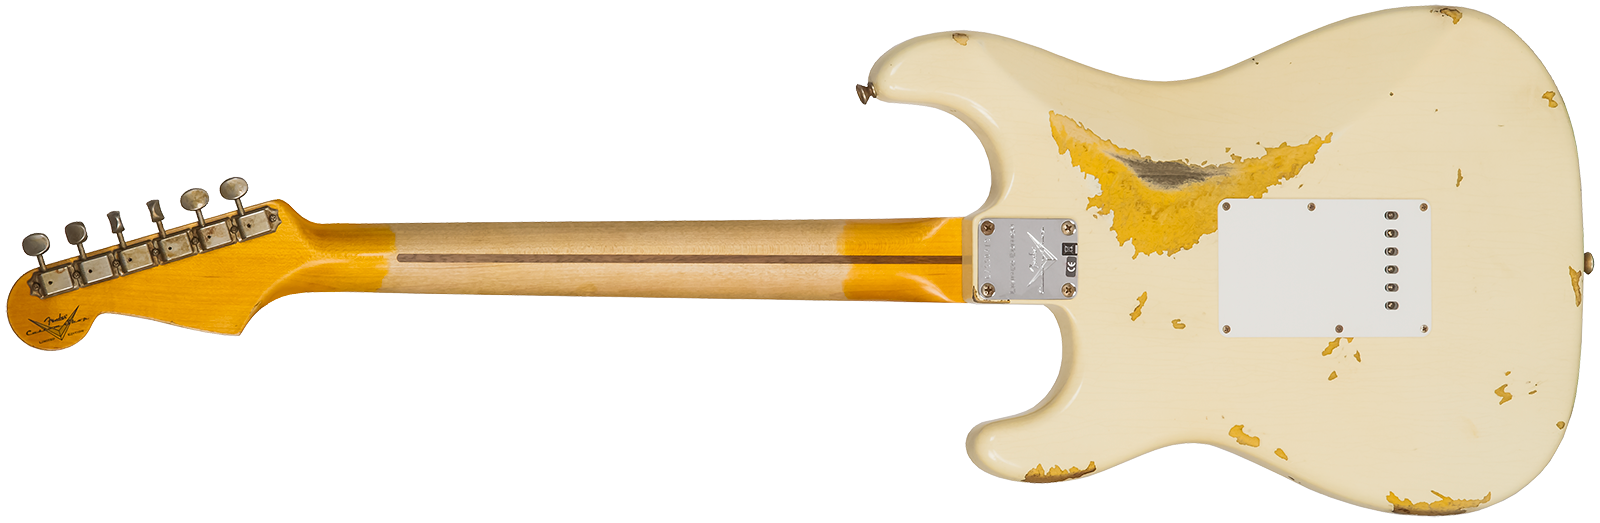 Fender Custom Shop Strat 1956 3s Trem Mn #cz550419 - Heavy Relic Vintage White Over Sunburst - Tel shape electric guitar - Variation 1